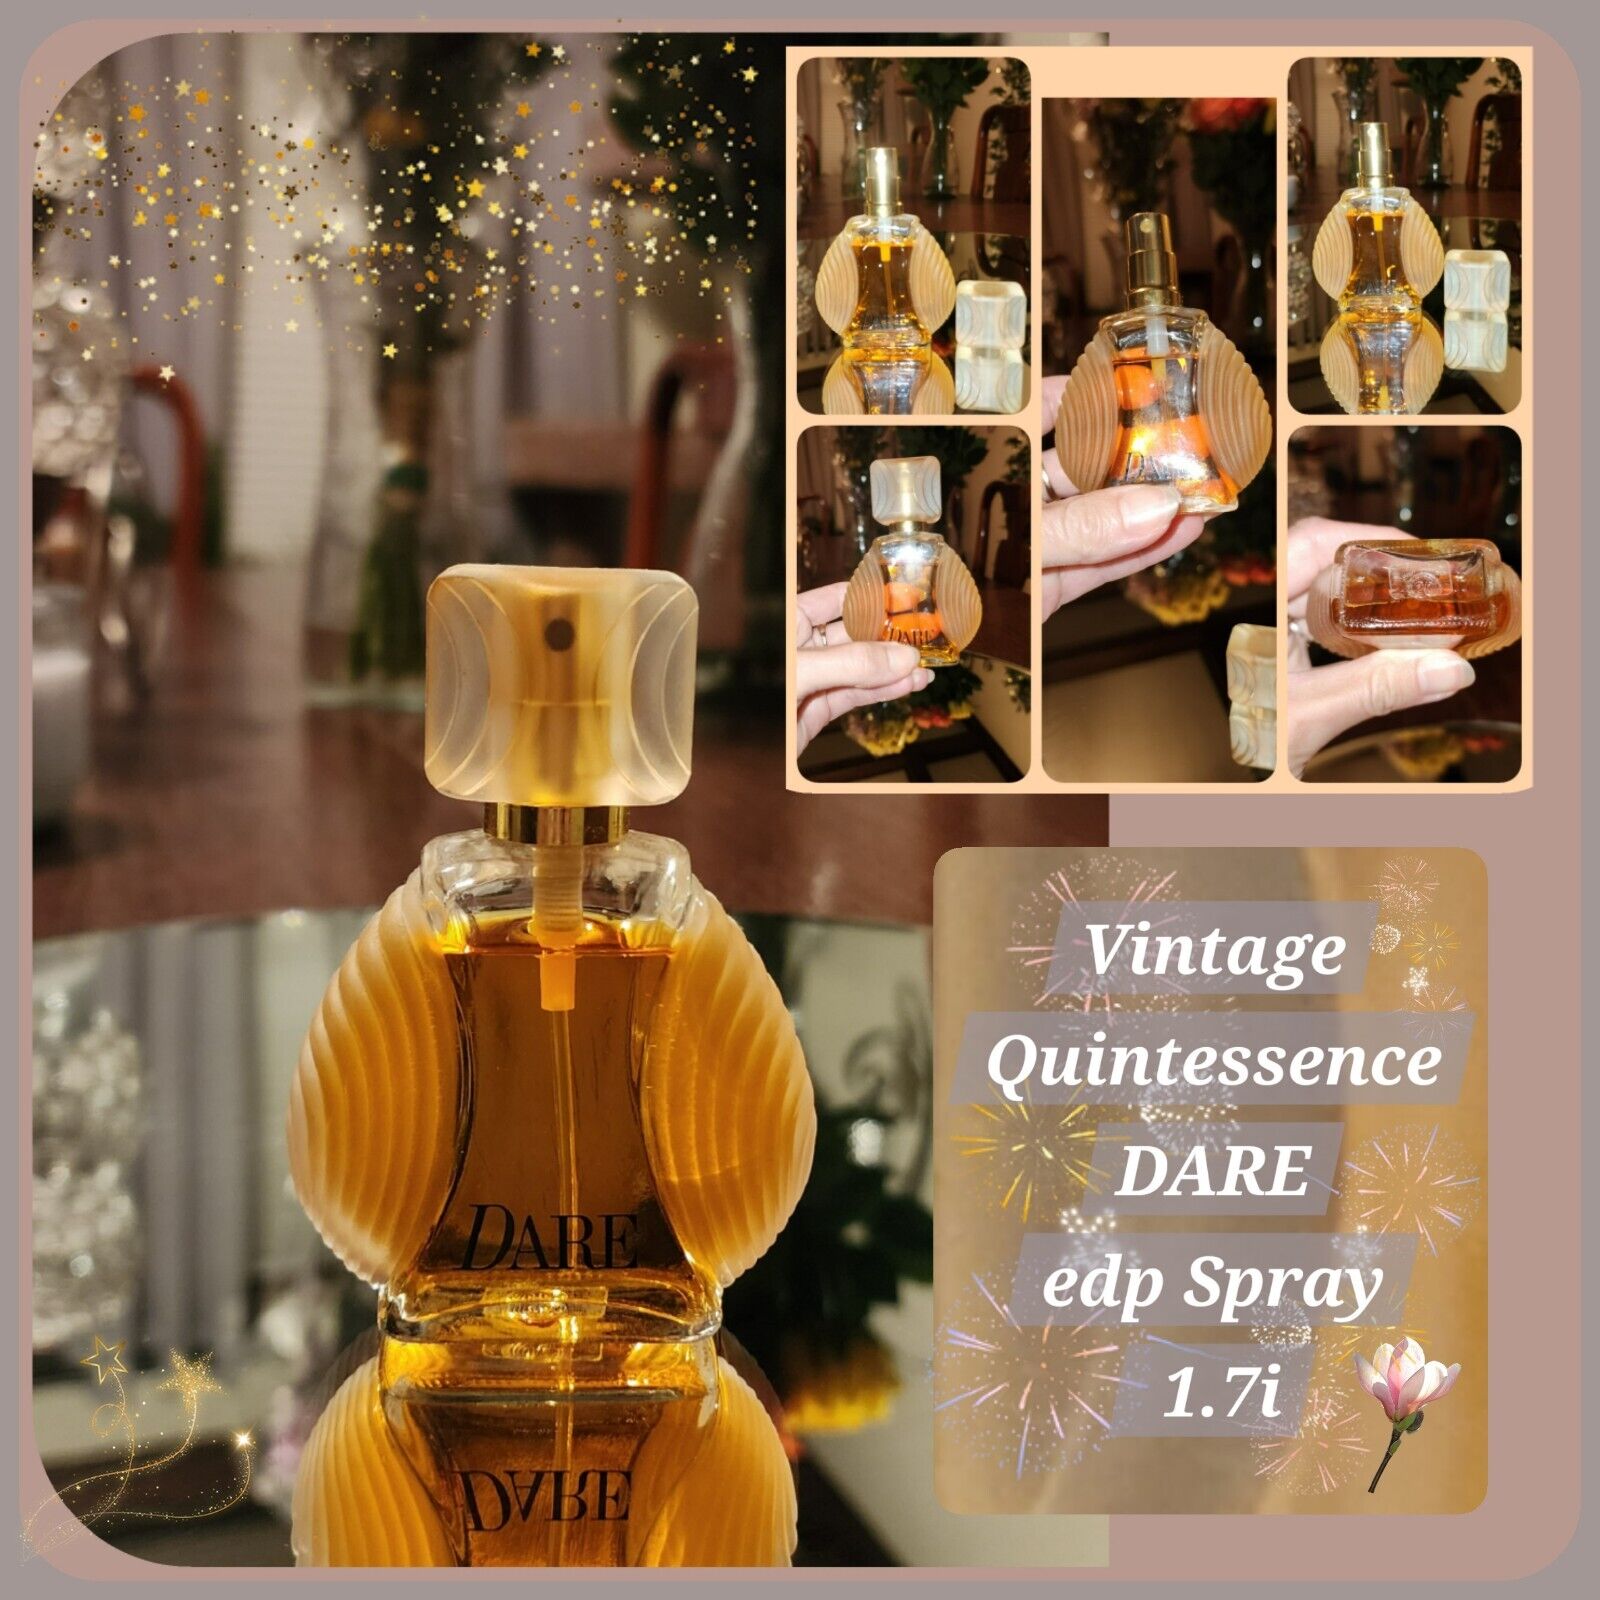 Vintage Quintessence DARE Edp Spray 1.7 fl oz 90% Full VTG Parfum Lovely Scent